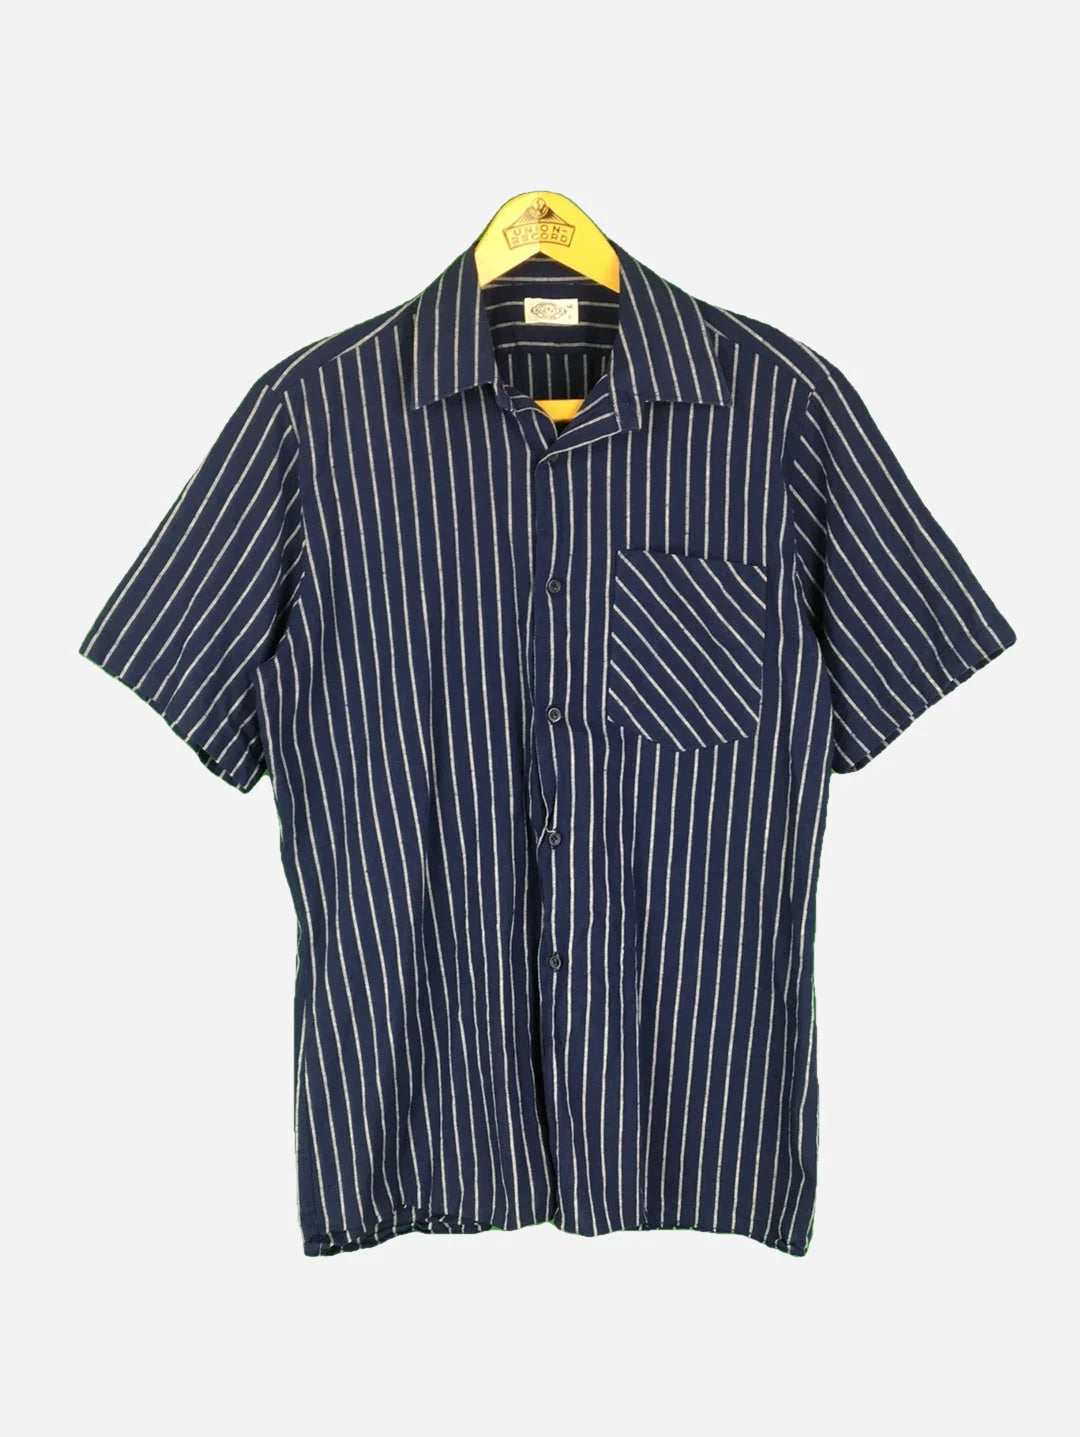 Klover short sleeve shirt (M)